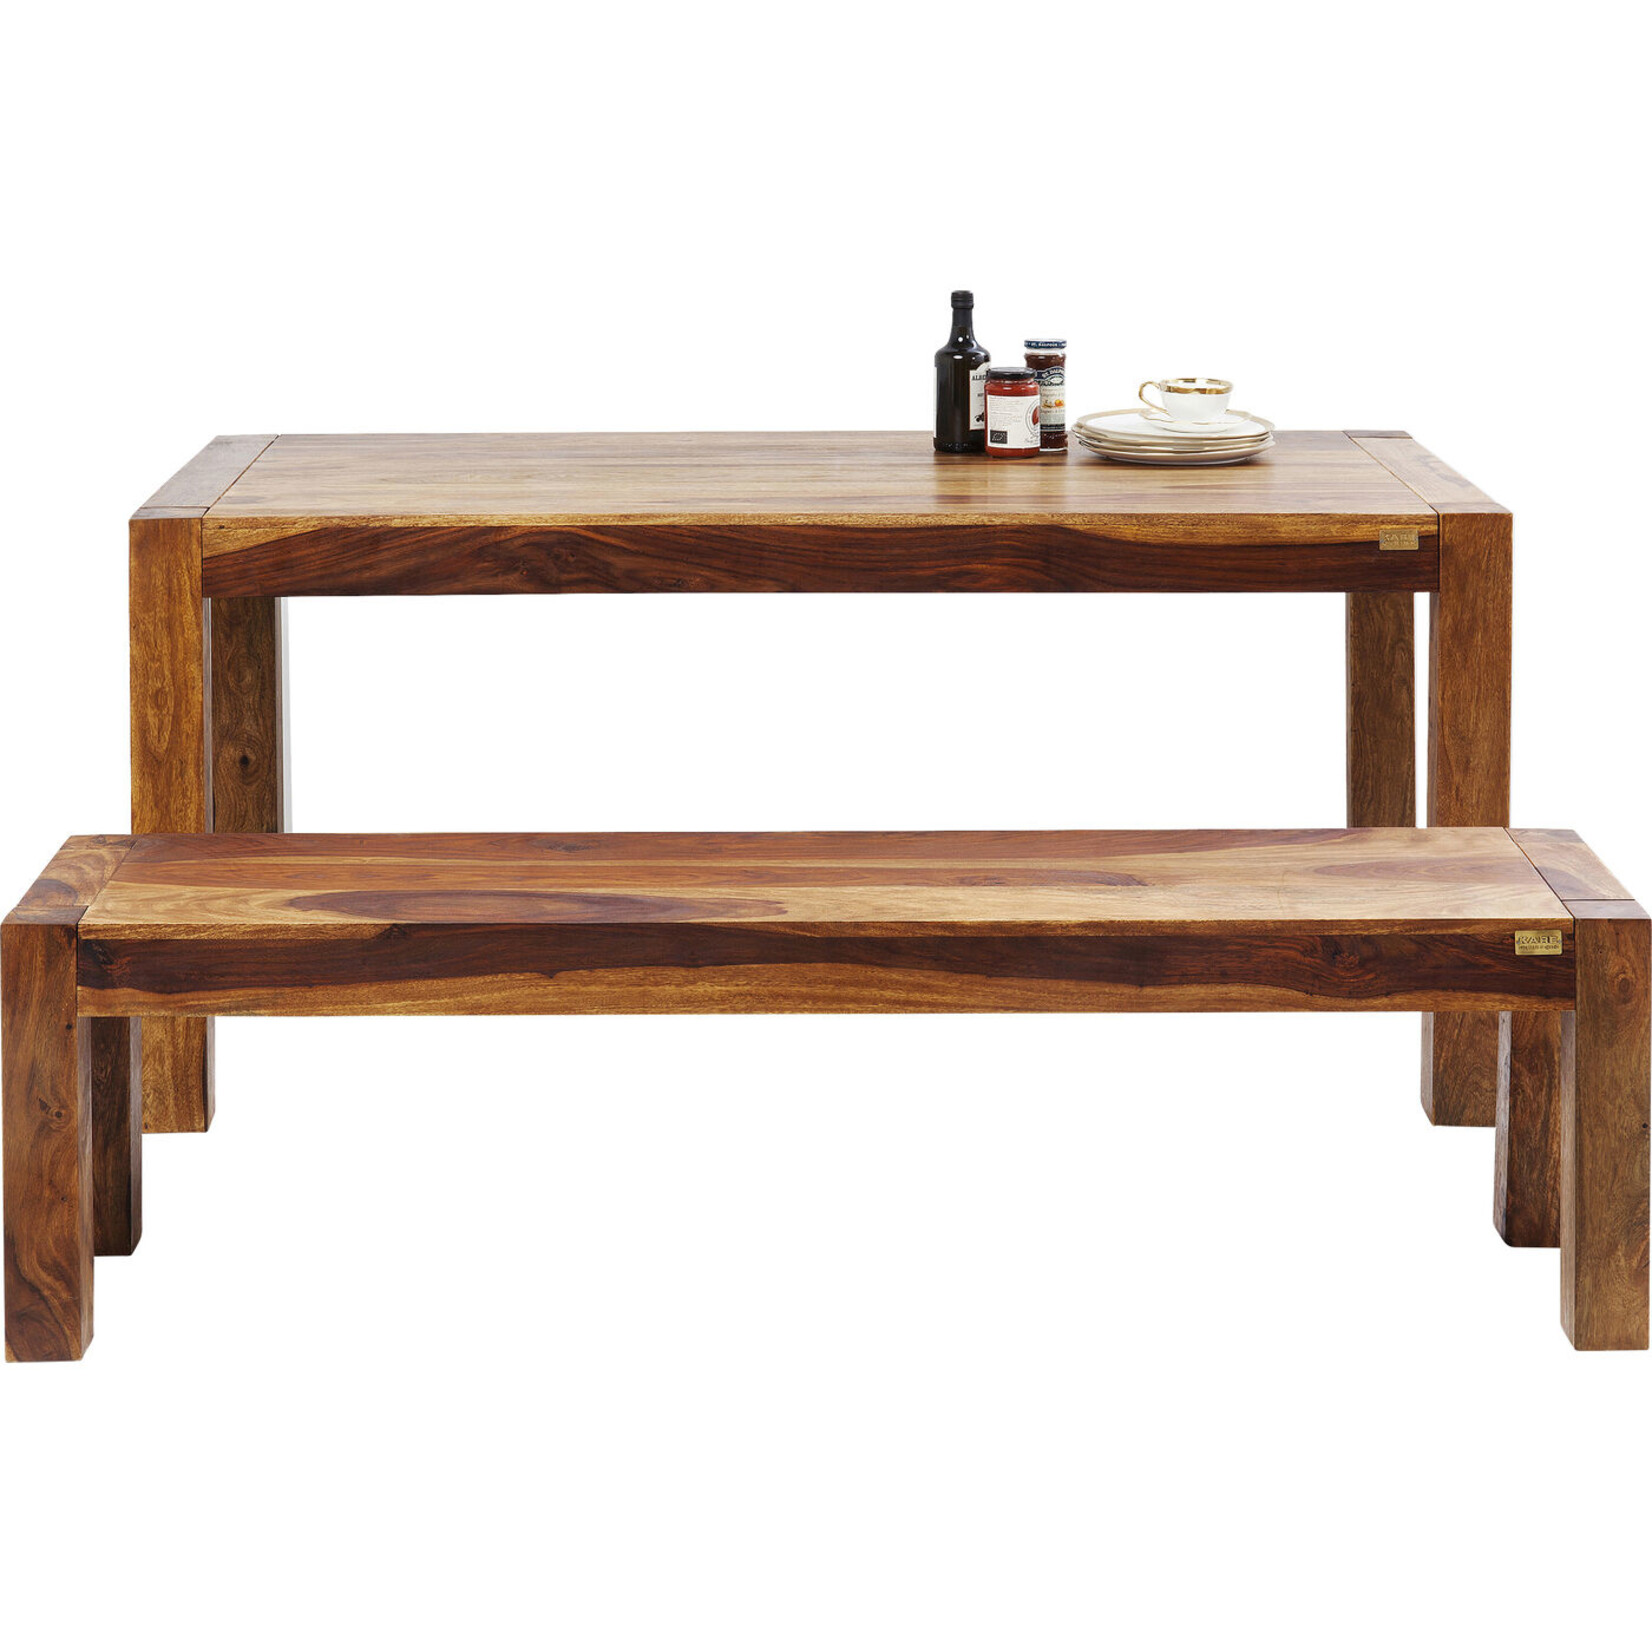 KARE DESIGN Authentico Table 160x80cm